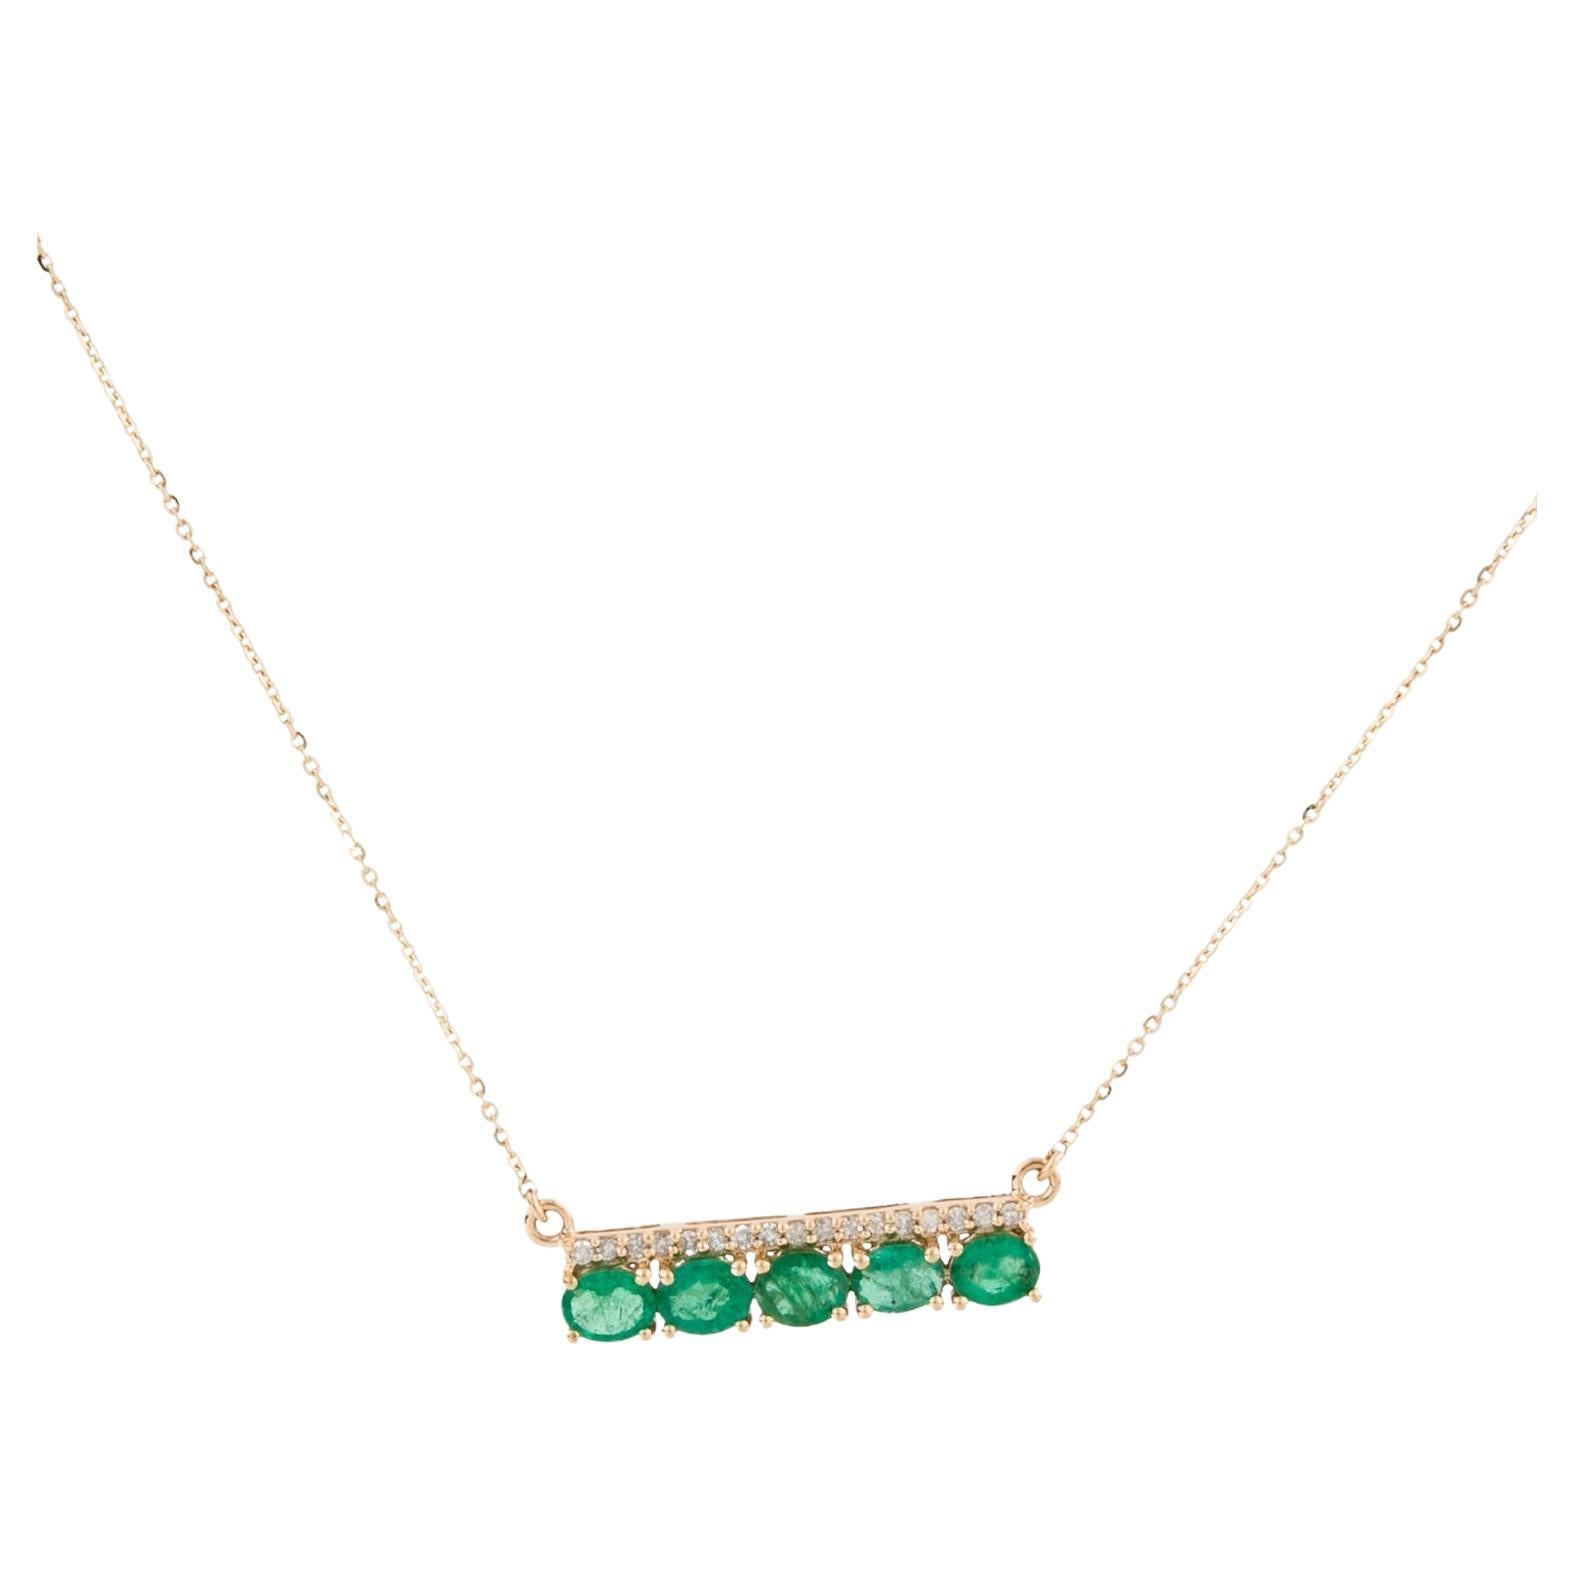 14K Emerald & Diamond Bar Pendant Necklace - Exquisite Gemstone Statement Piece